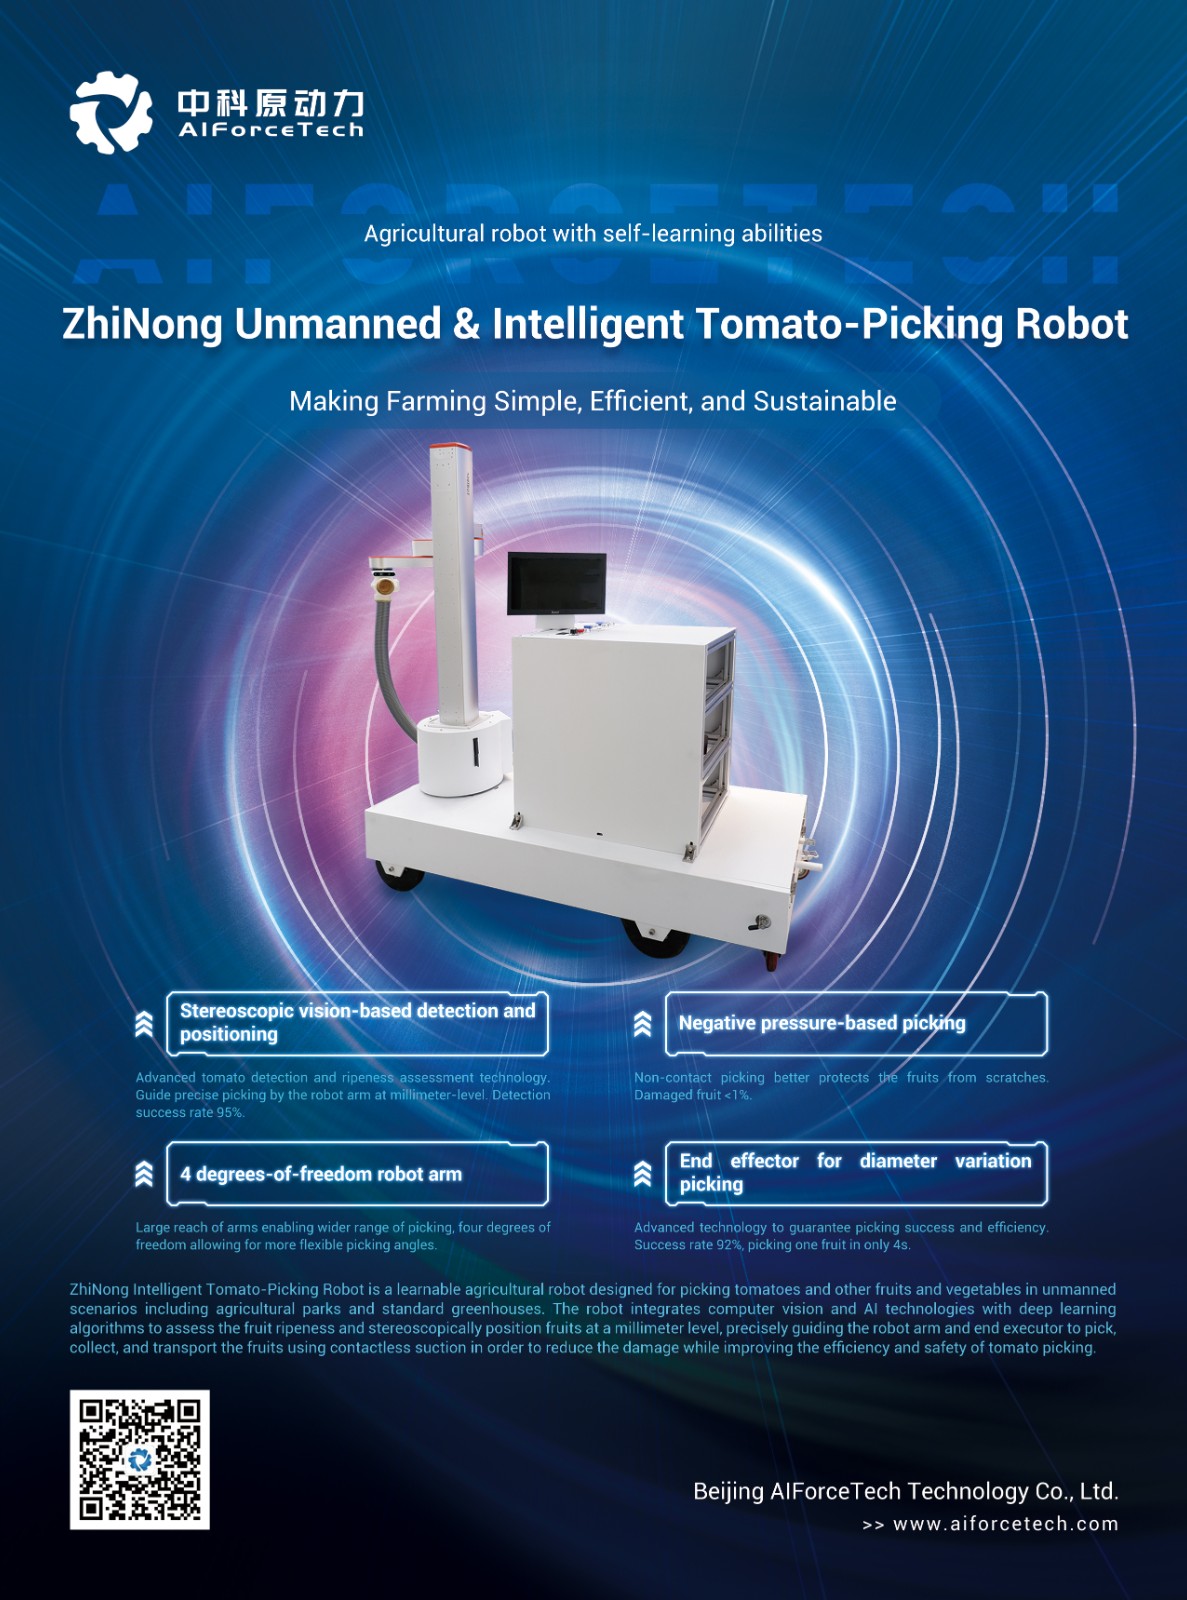 ZhiNong Unmanned & Intelligent Tomato-Picking Robot